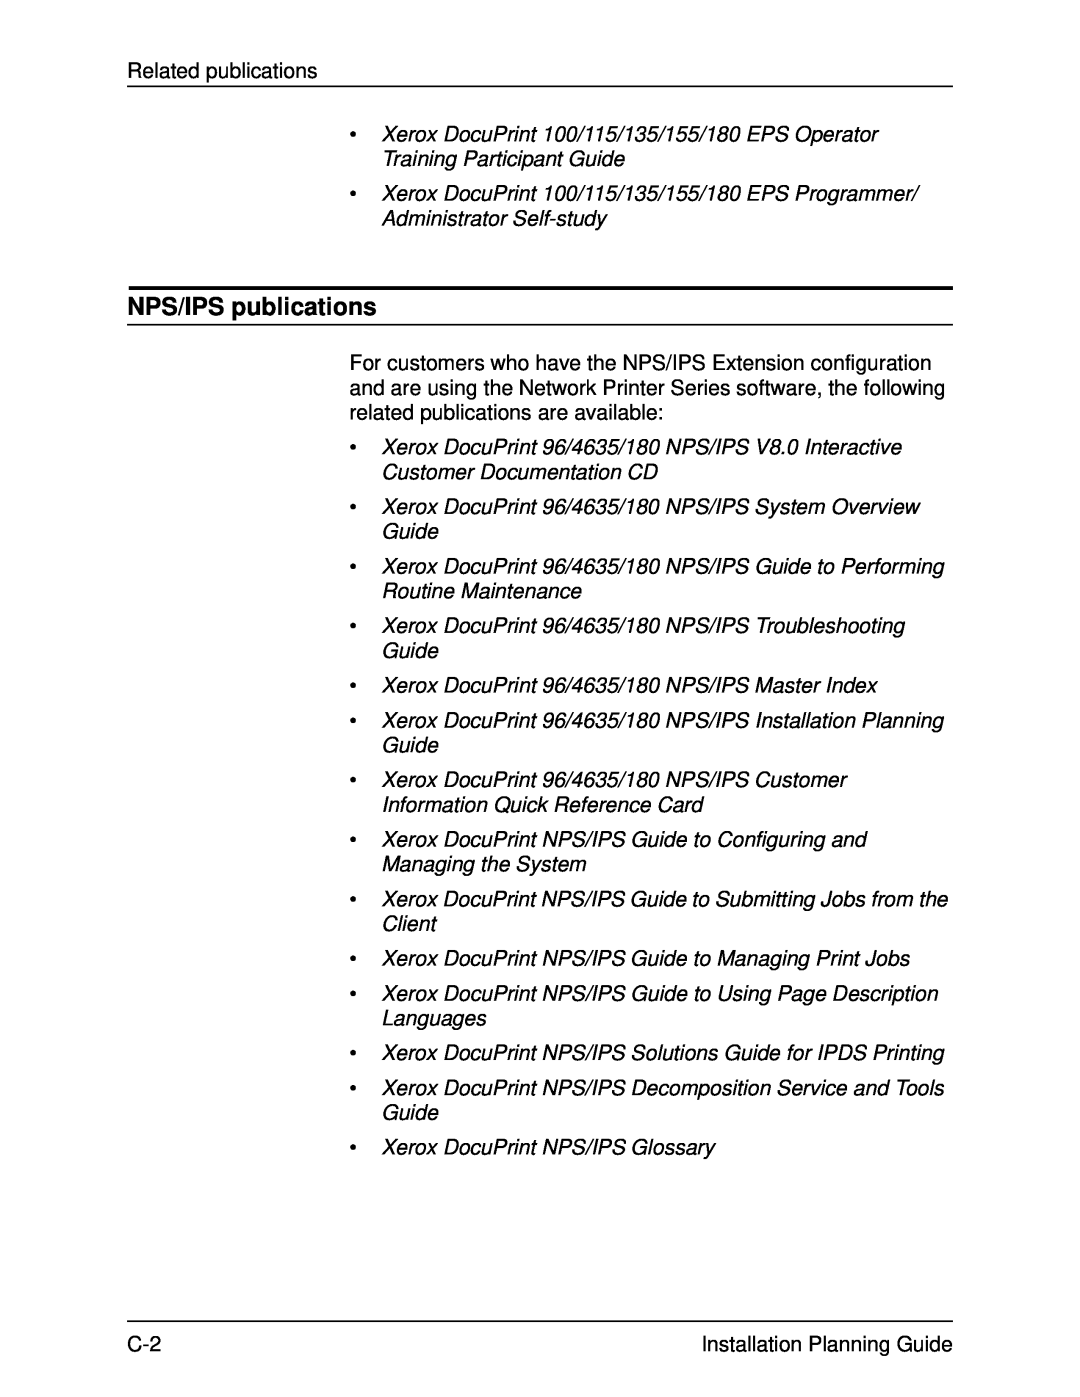 Xerox 135, 100 Xerox DocuPrint 96/4635/180 NPS/IPS System Overview Guide, Xerox DocuPrint 96/4635/180 NPS/IPS Master Index 